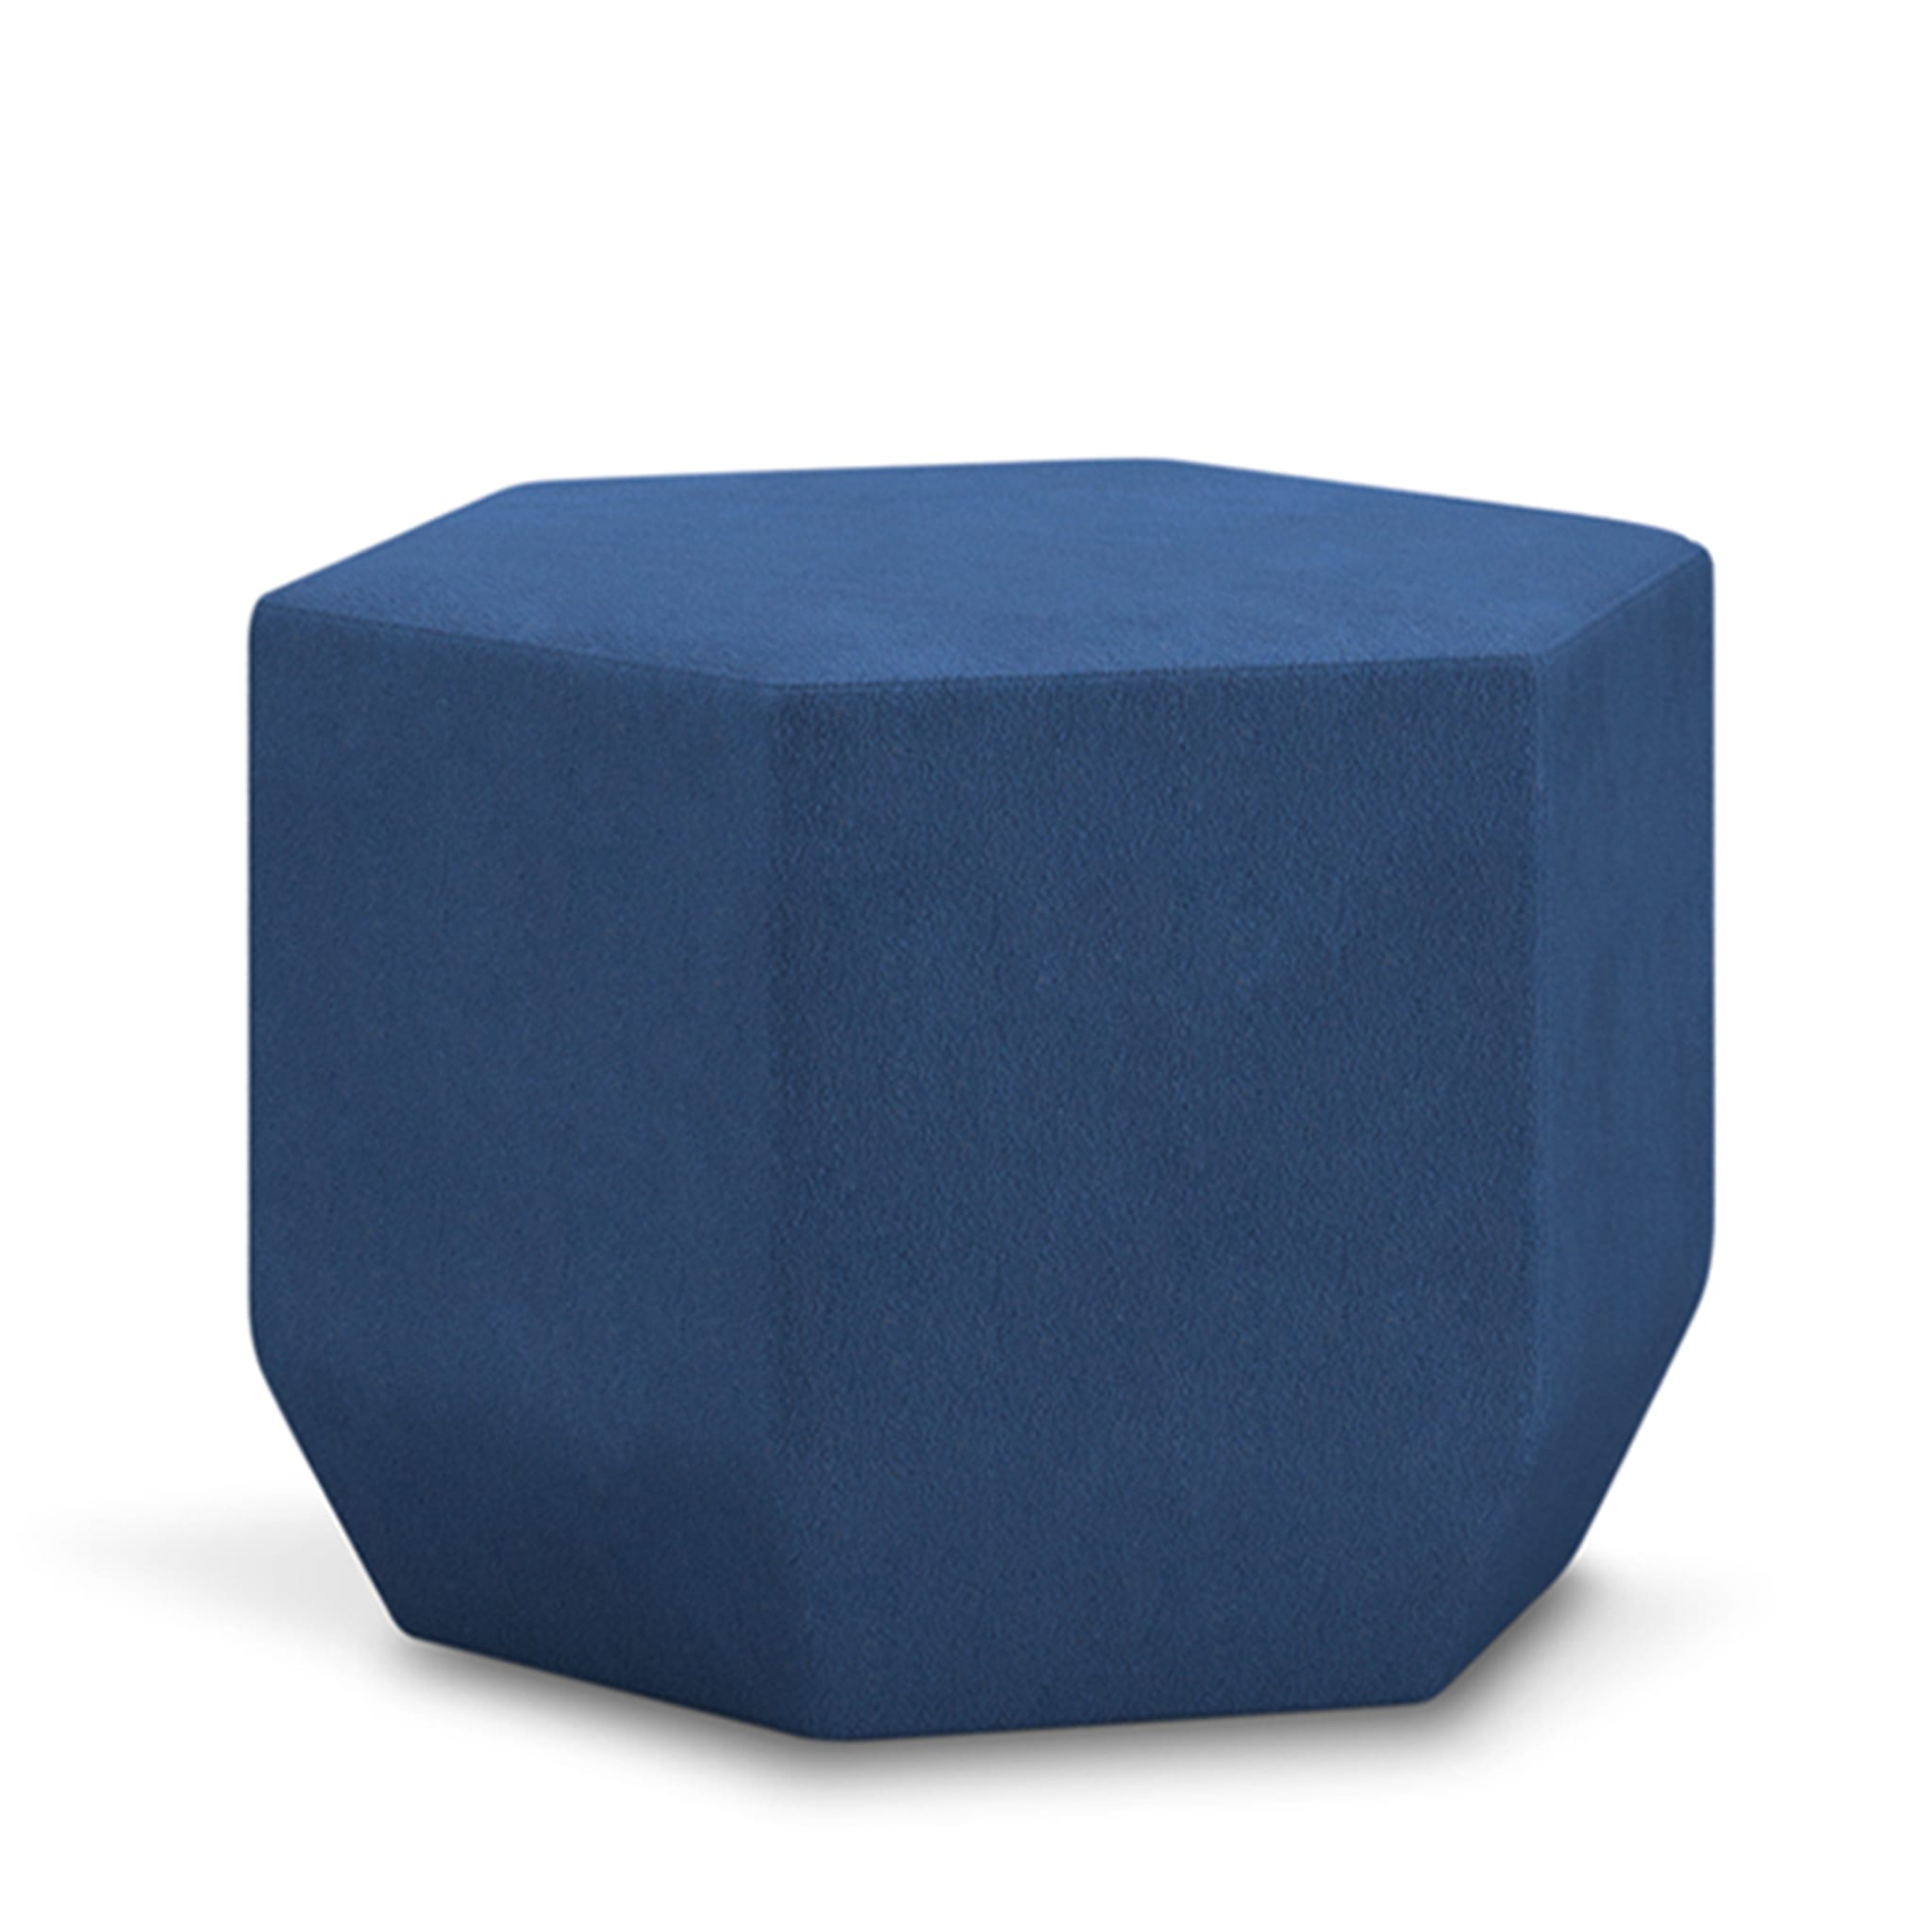 Tigram Small Hexagonal Blue Pouf by Italo Pertichini - Alternative view 1